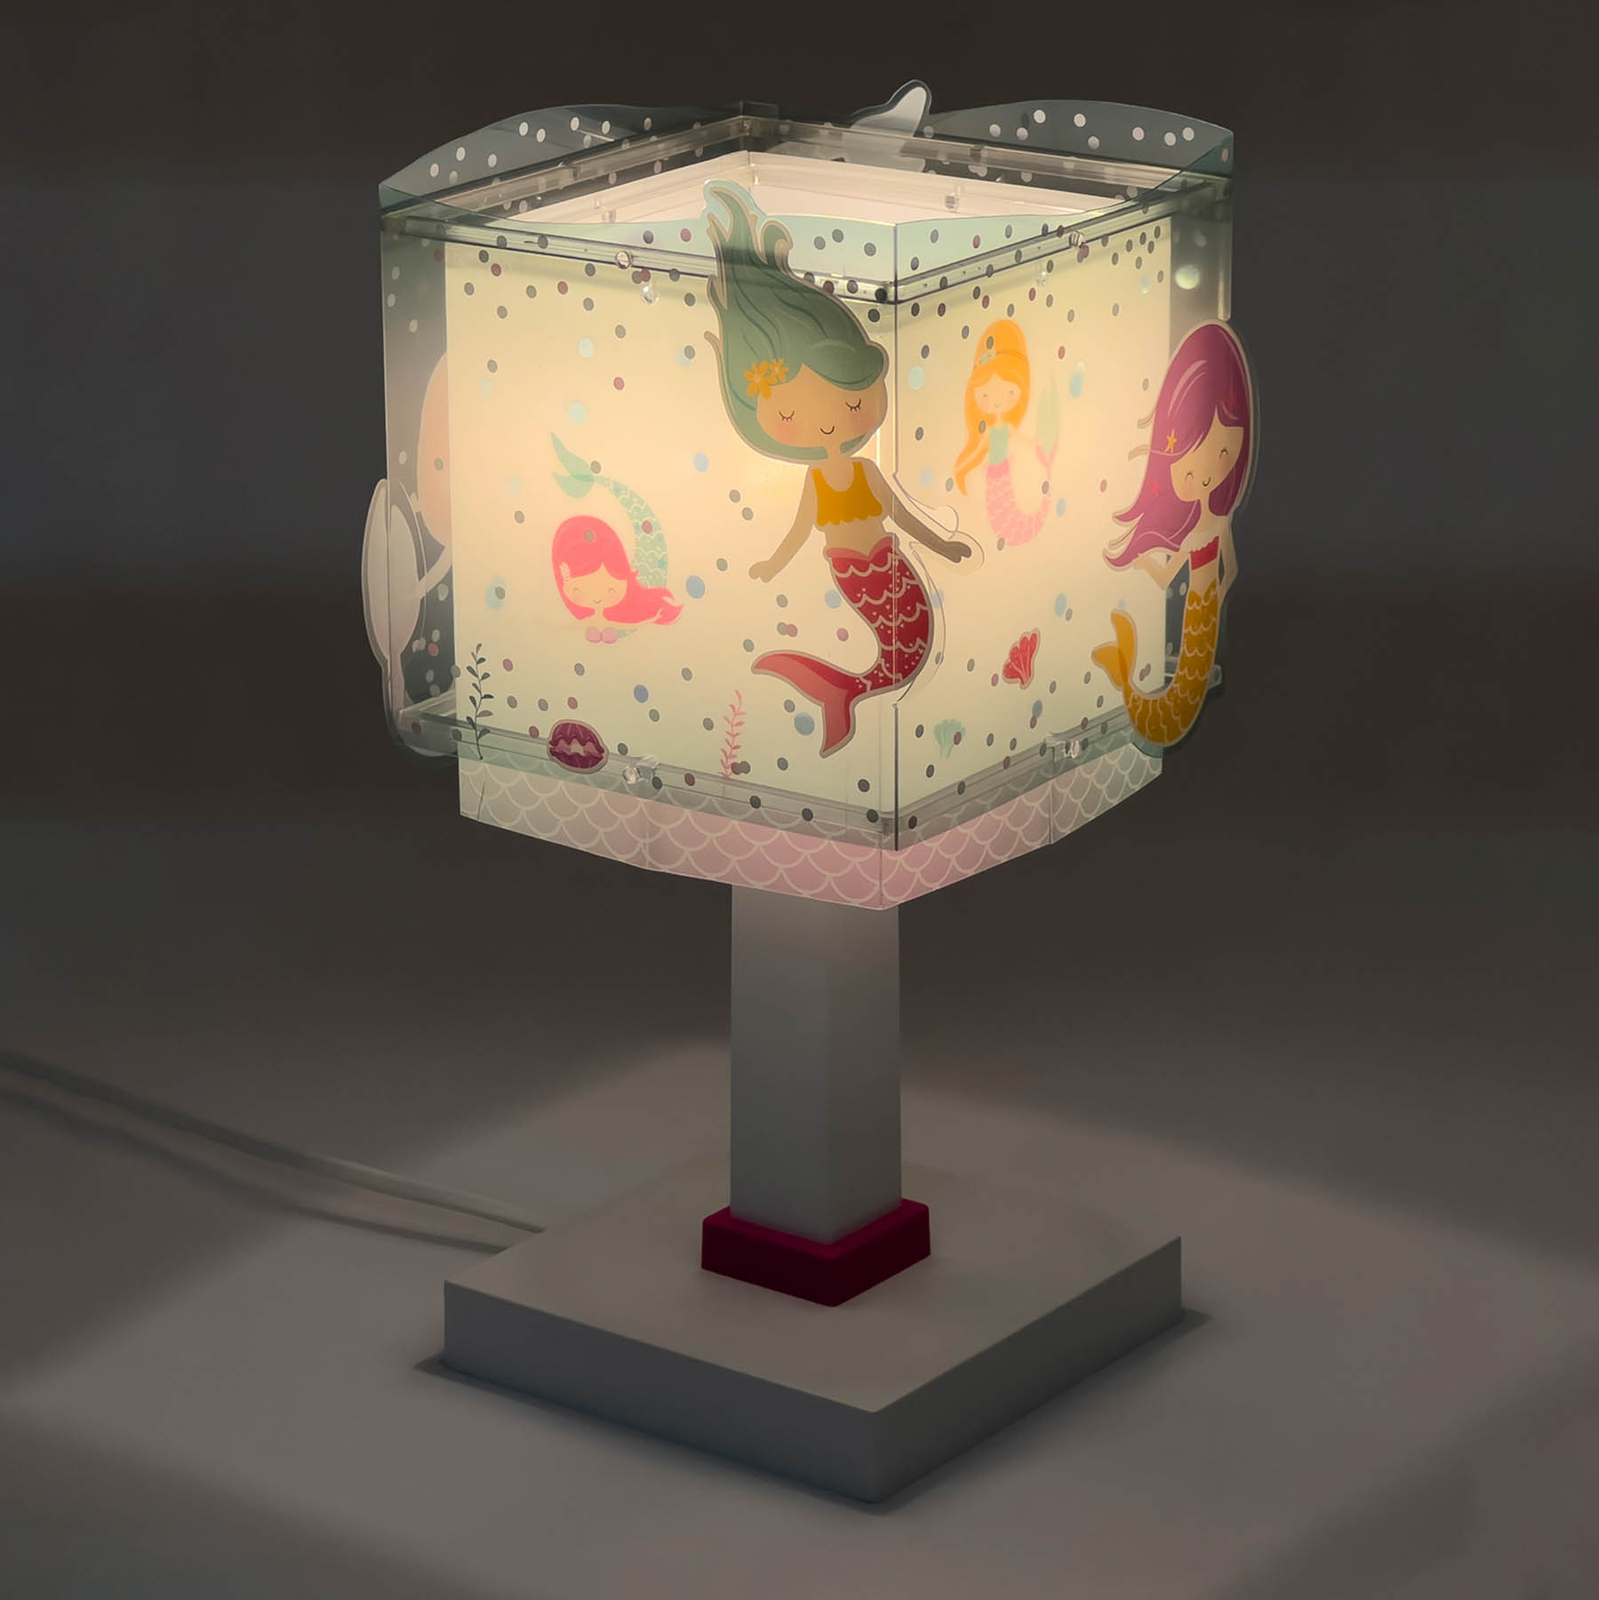 Dalber Mermaids table lamp with a mermaid motif